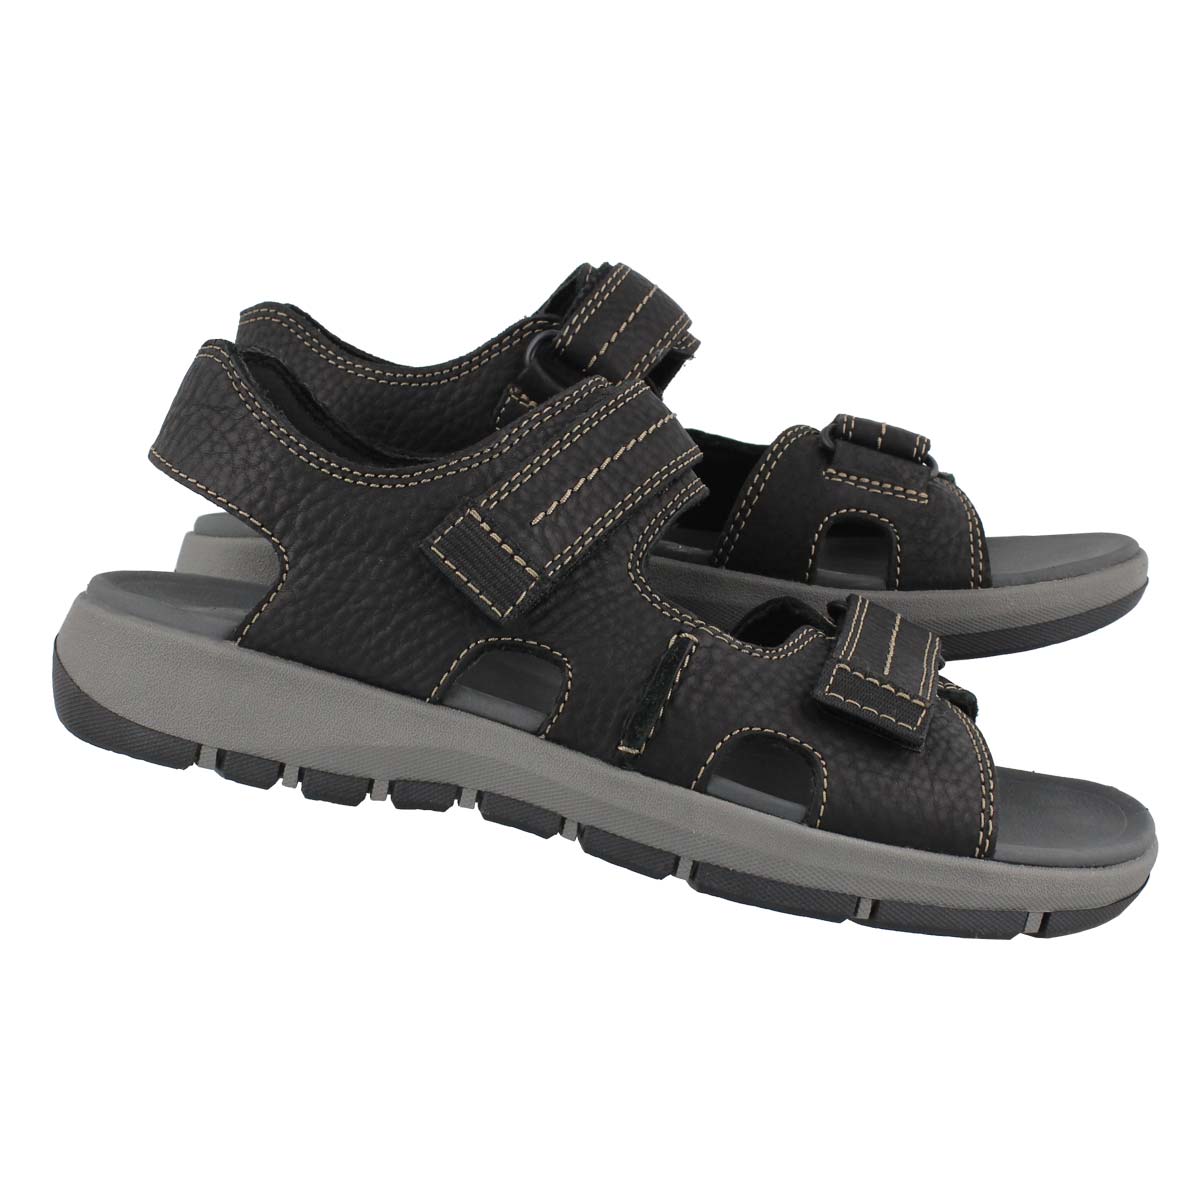 softmoc clarks sandals